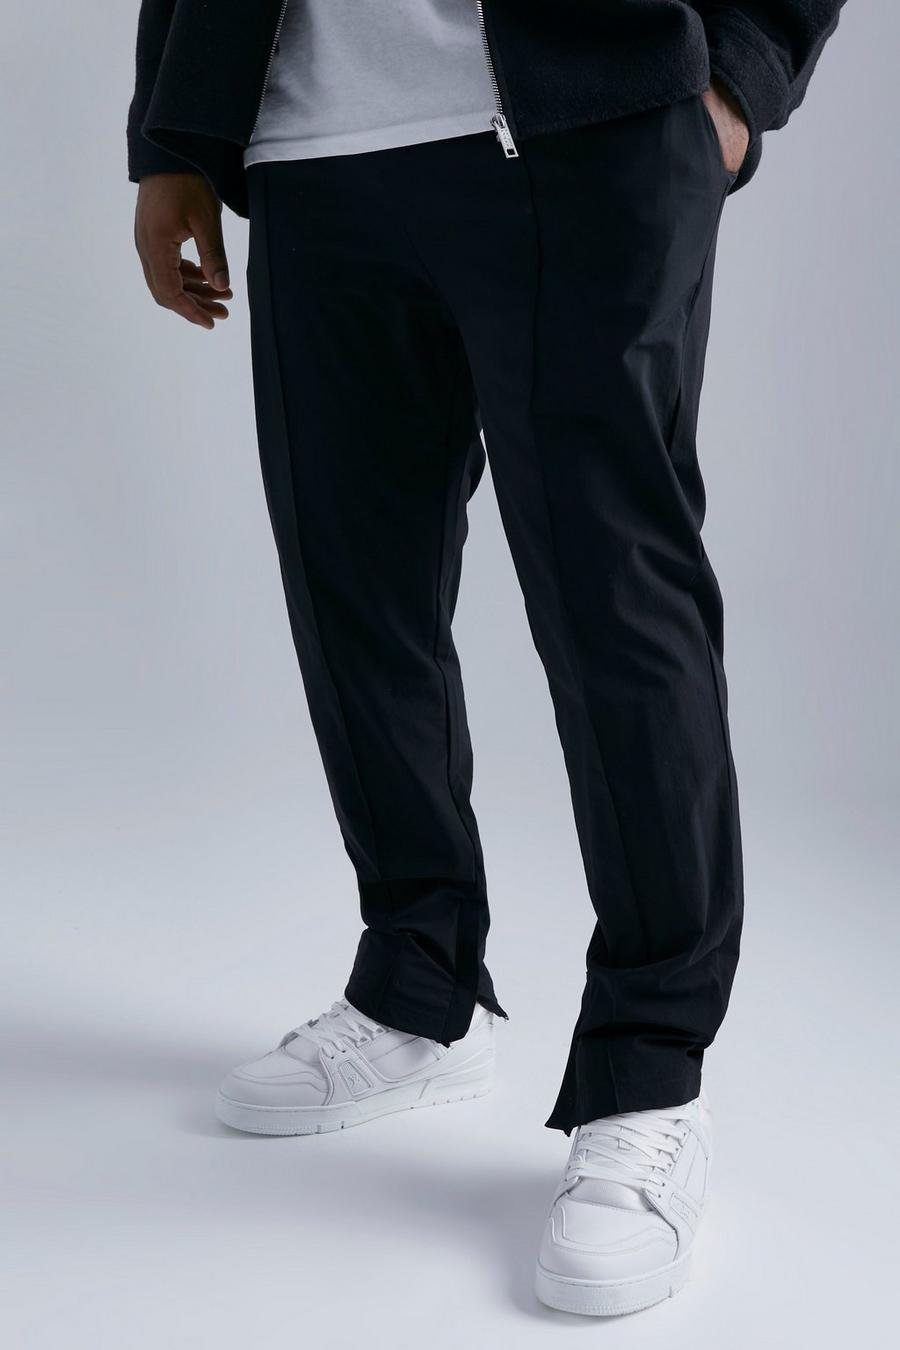 Plus Slim-Fit Hose mit 4-Way Stretch, Black schwarz